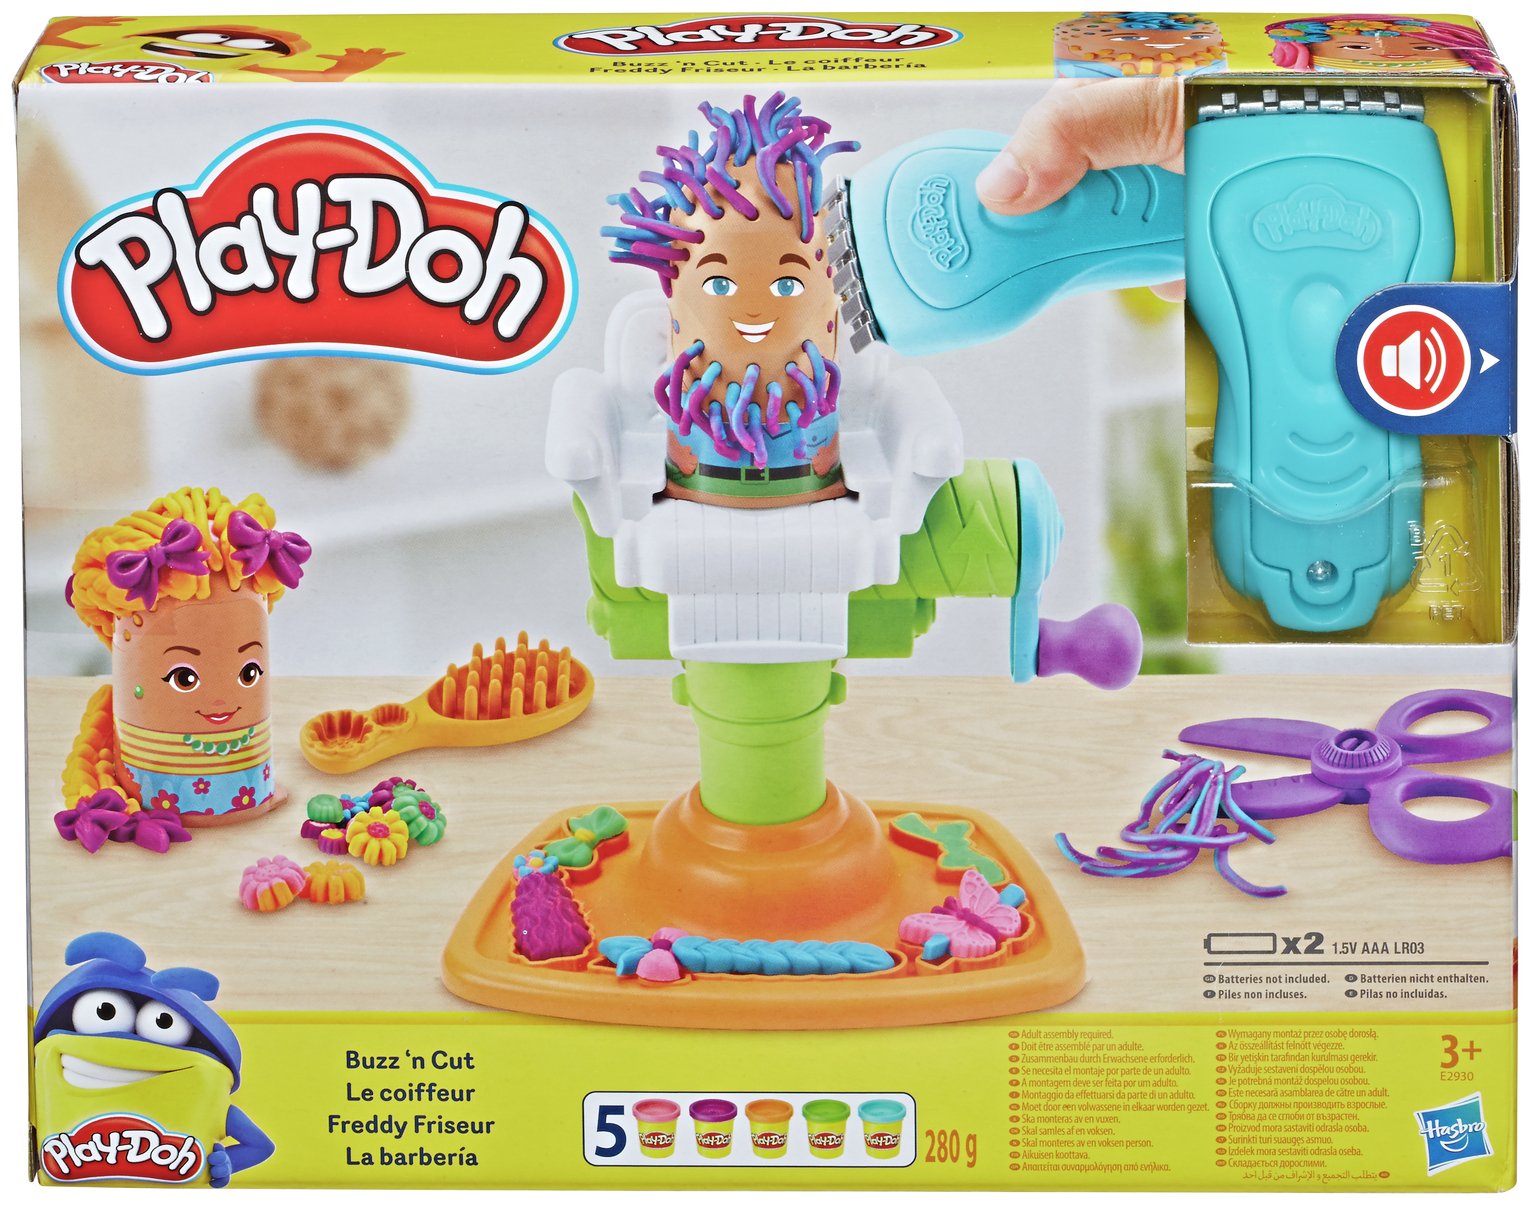 Play-Doh Buzz 'n Cut Barber Shop Set Review